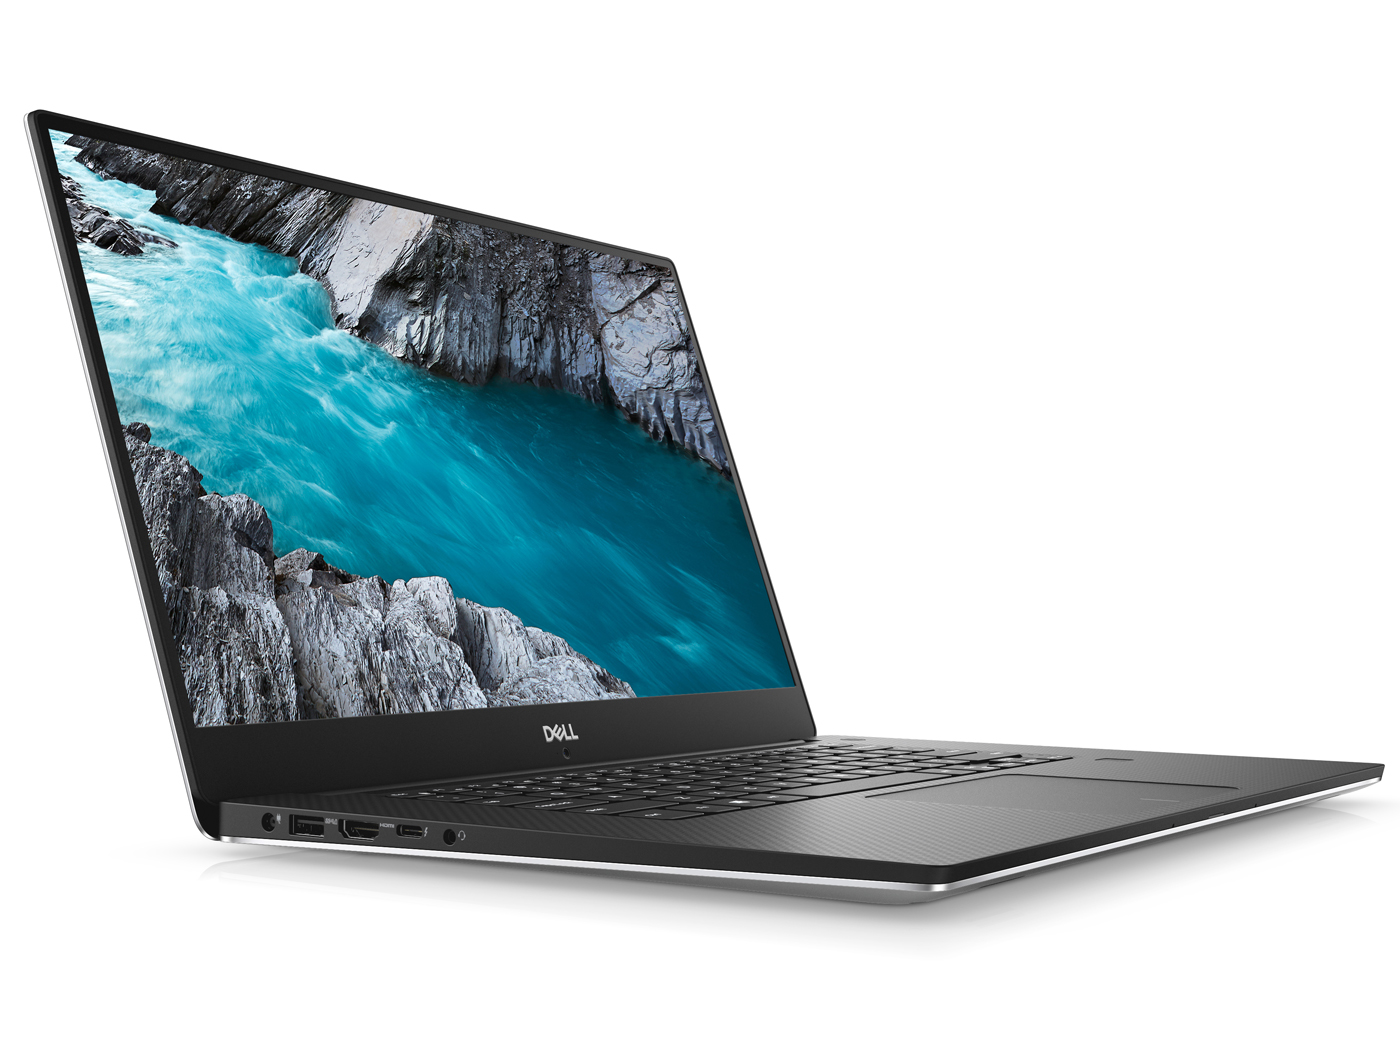 Dell XPS 15 9570 (i7, GTX 1050 Ti Max-Q) Laptop Review - NotebookCheck.net Reviews